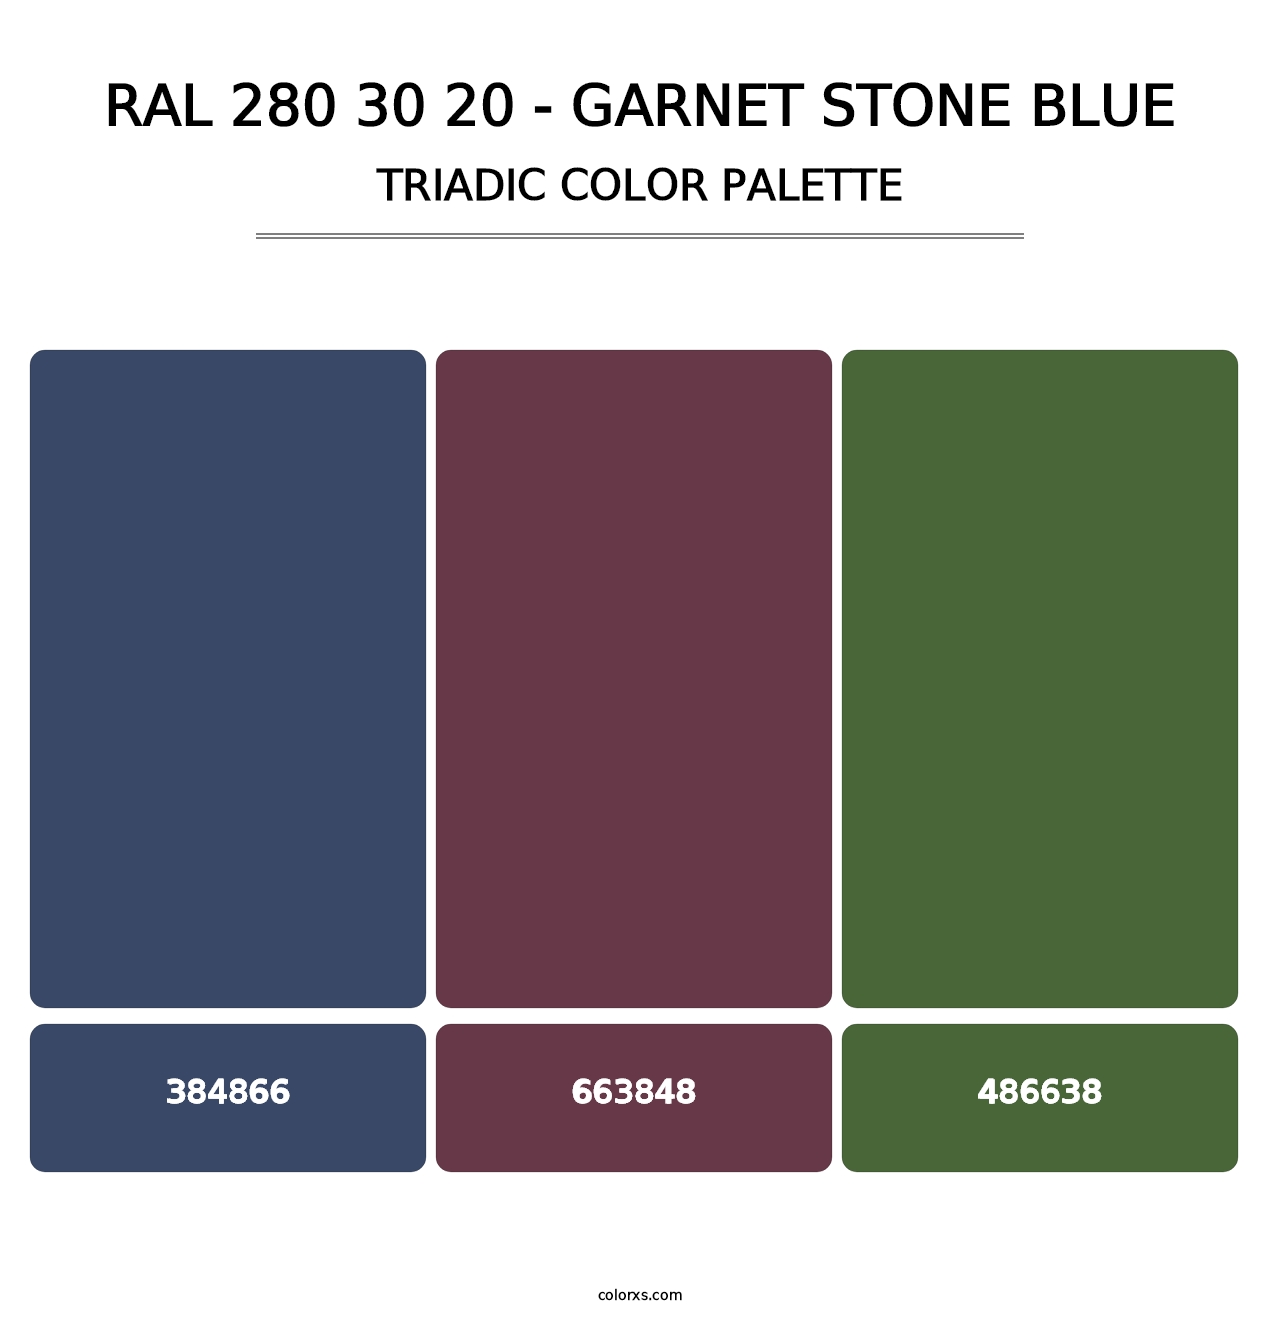 RAL 280 30 20 - Garnet Stone Blue - Triadic Color Palette